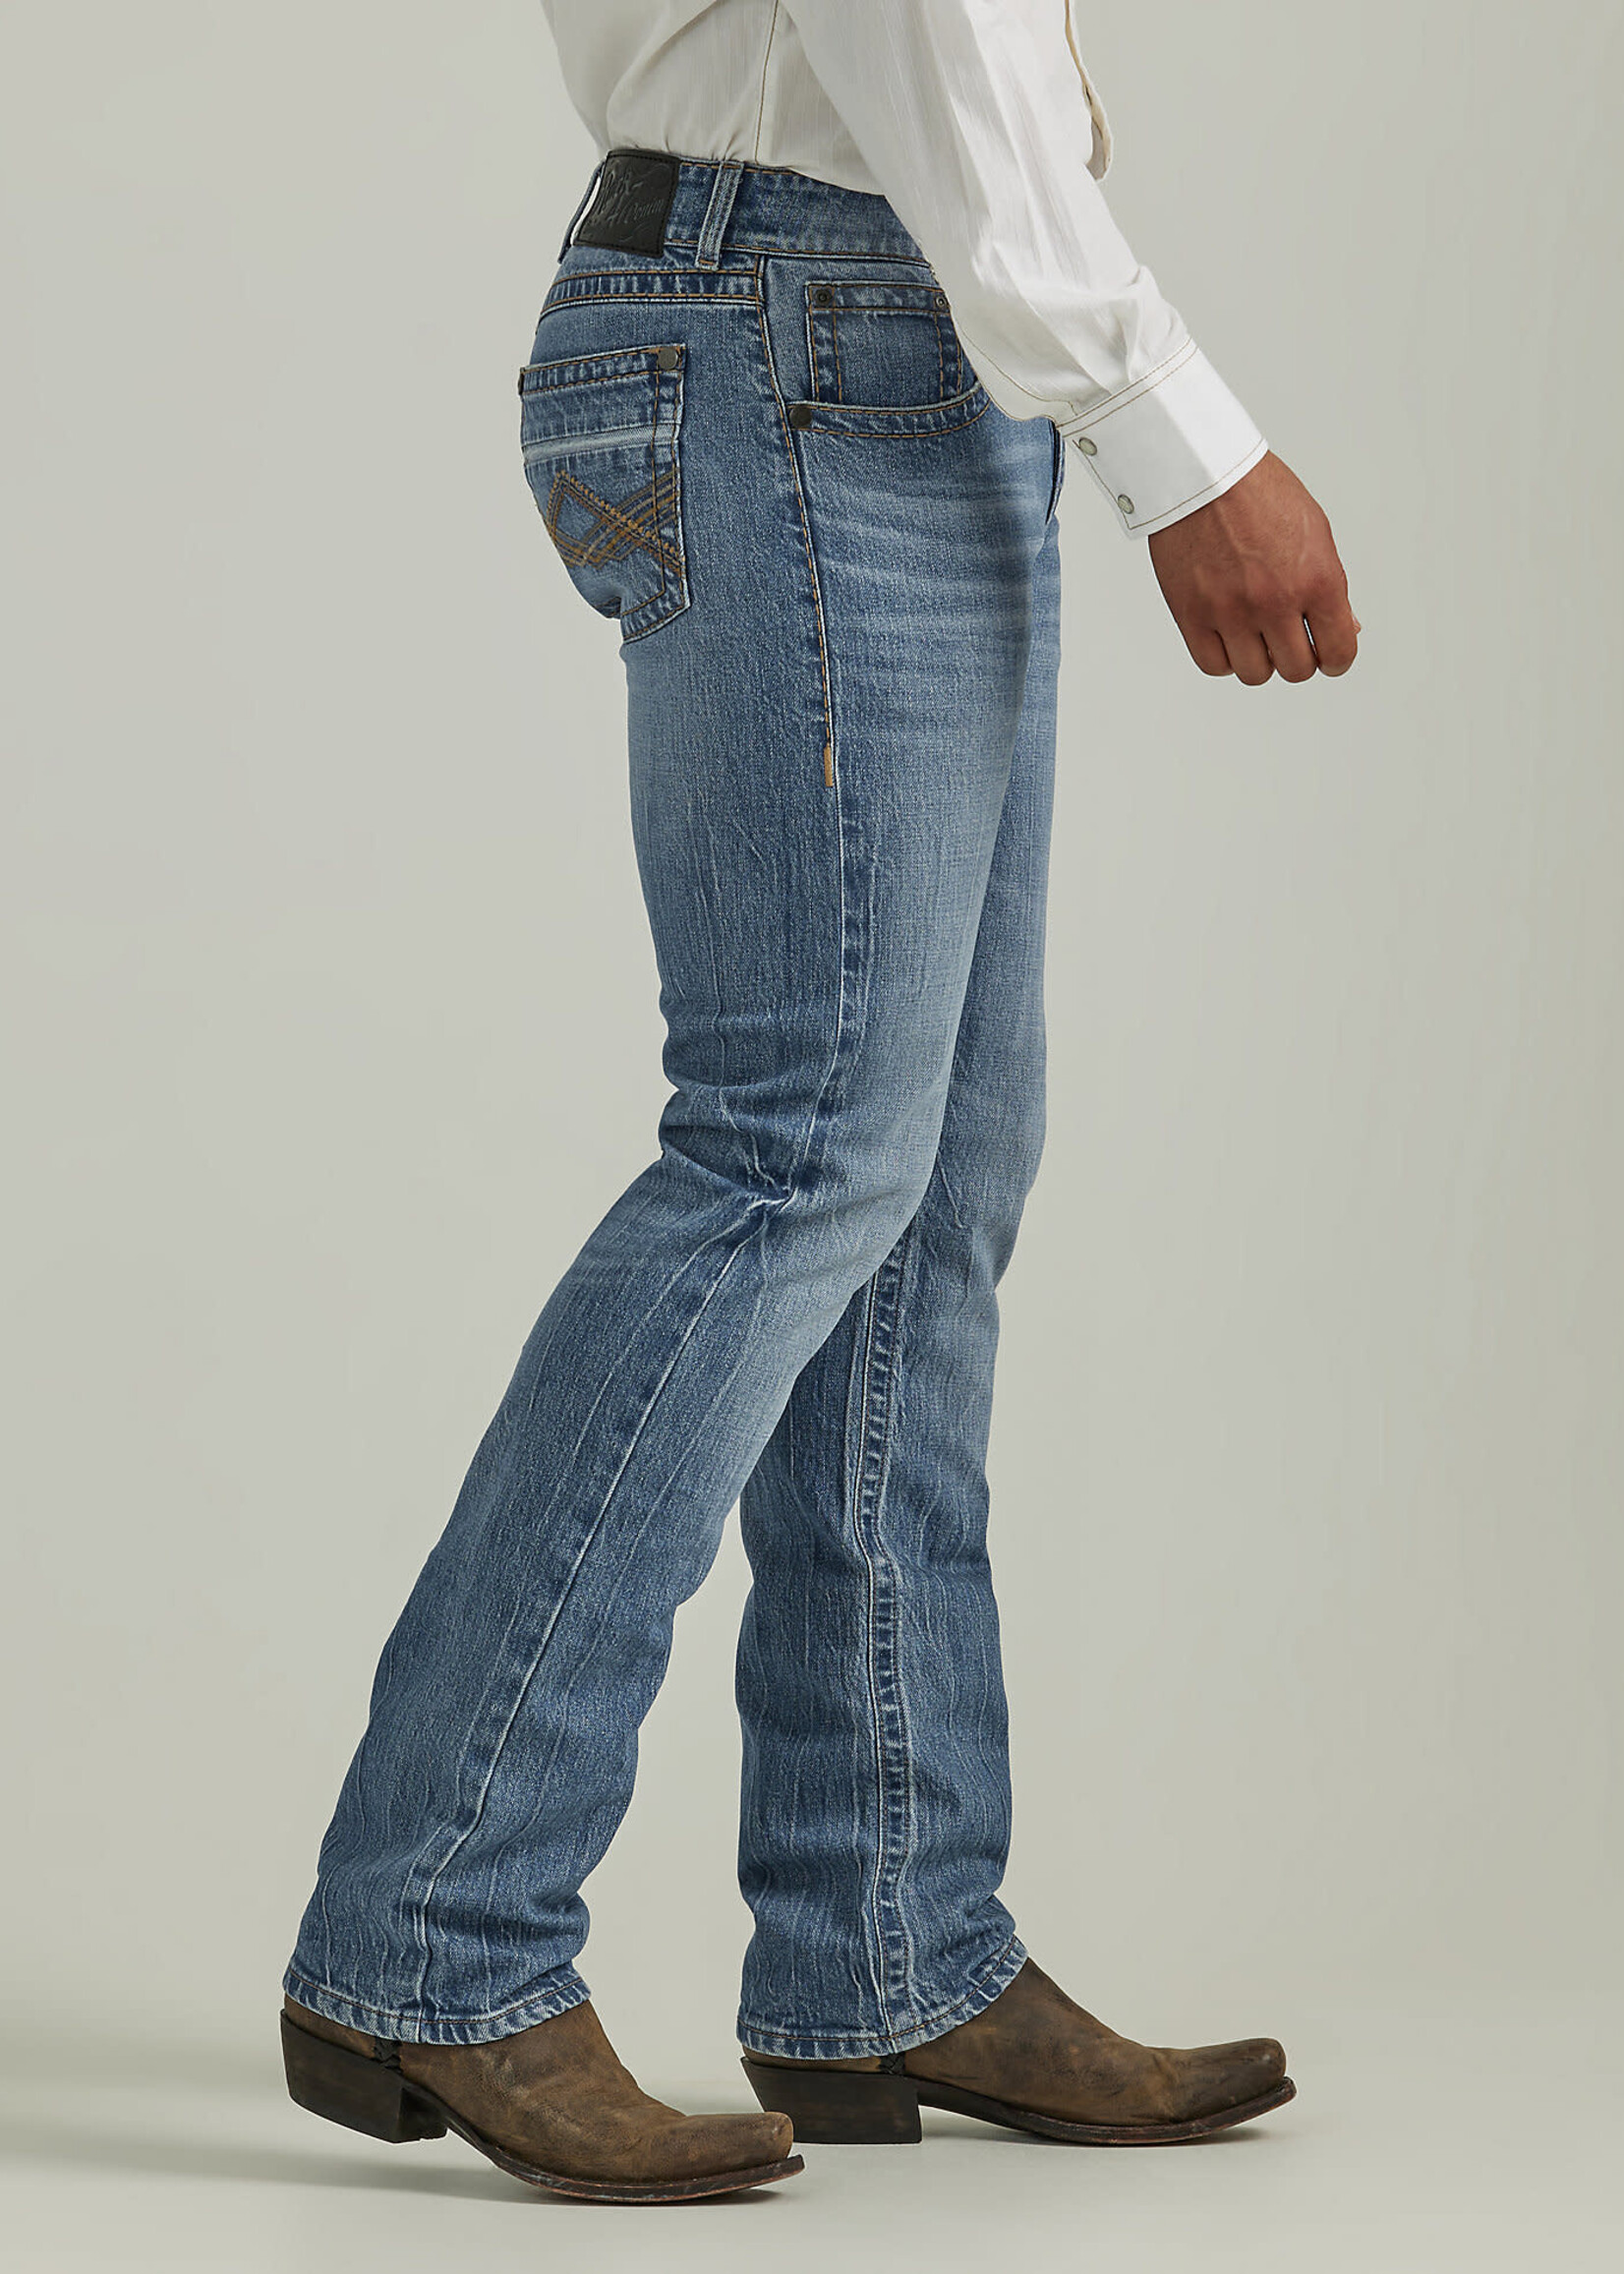 Wrangler Mens Cowboy Cut Jeans - 112336395